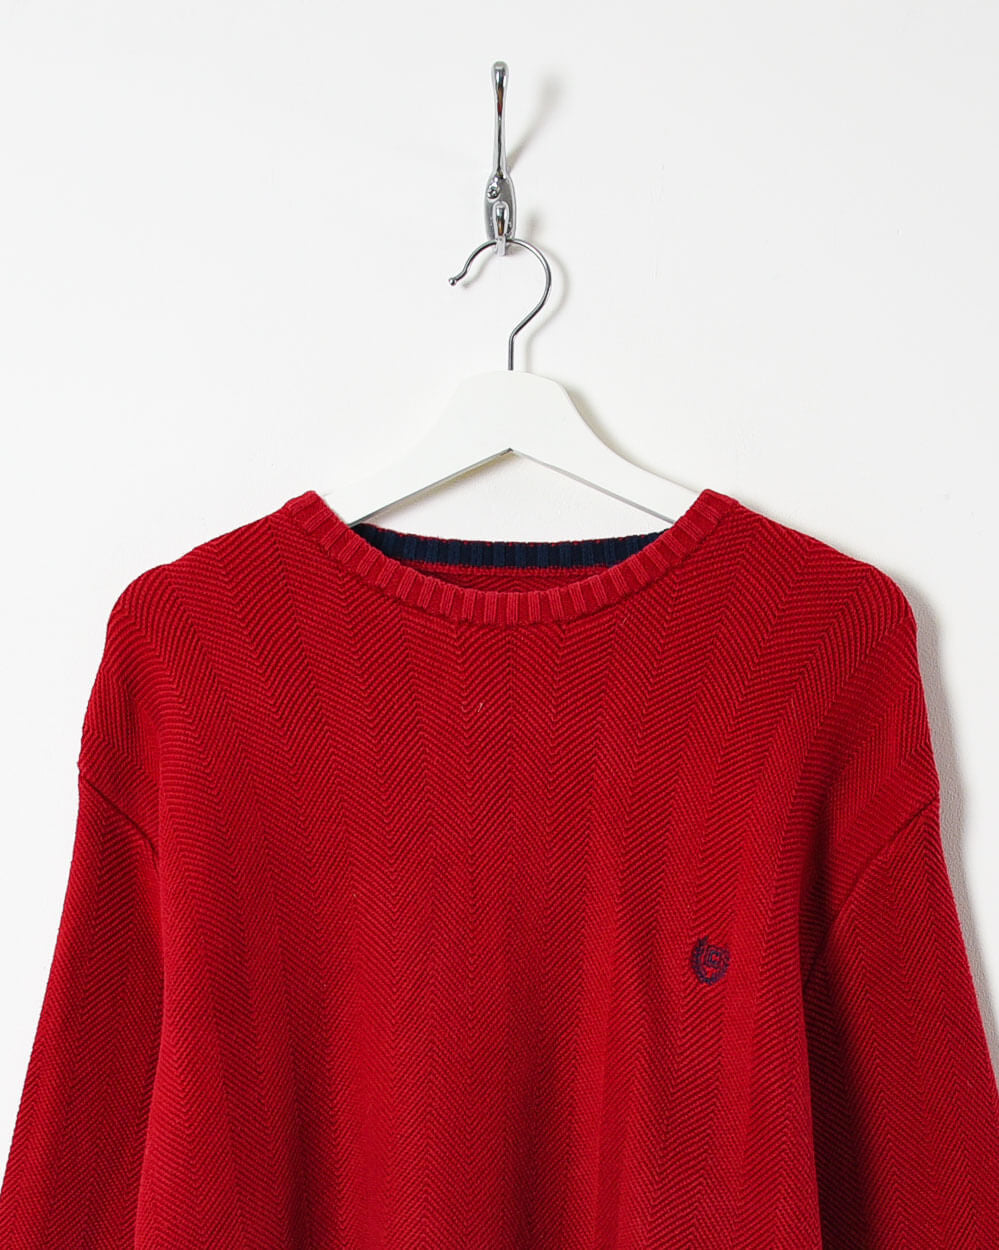 Maroon Ralph Lauren Chaps Knitted Sweatshirt - X-Large